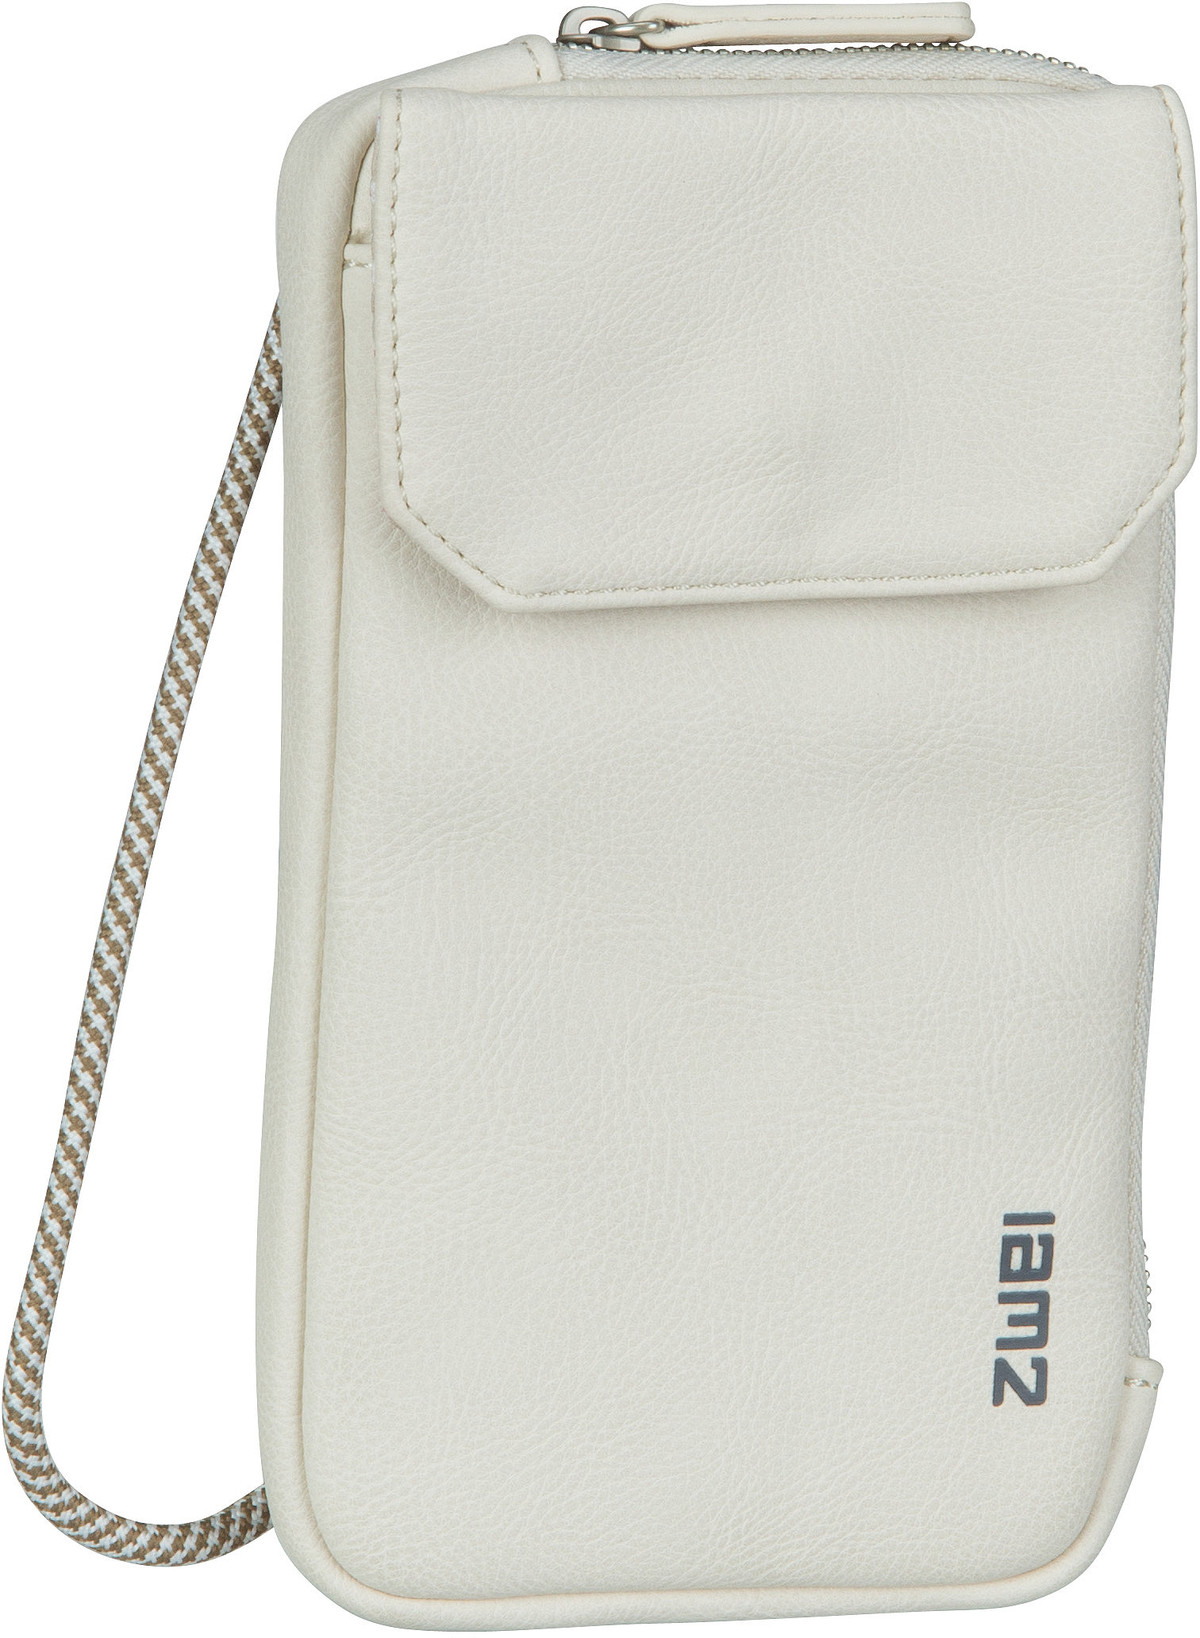 zwei Mademoiselle Phone Bag MP30 - Off White